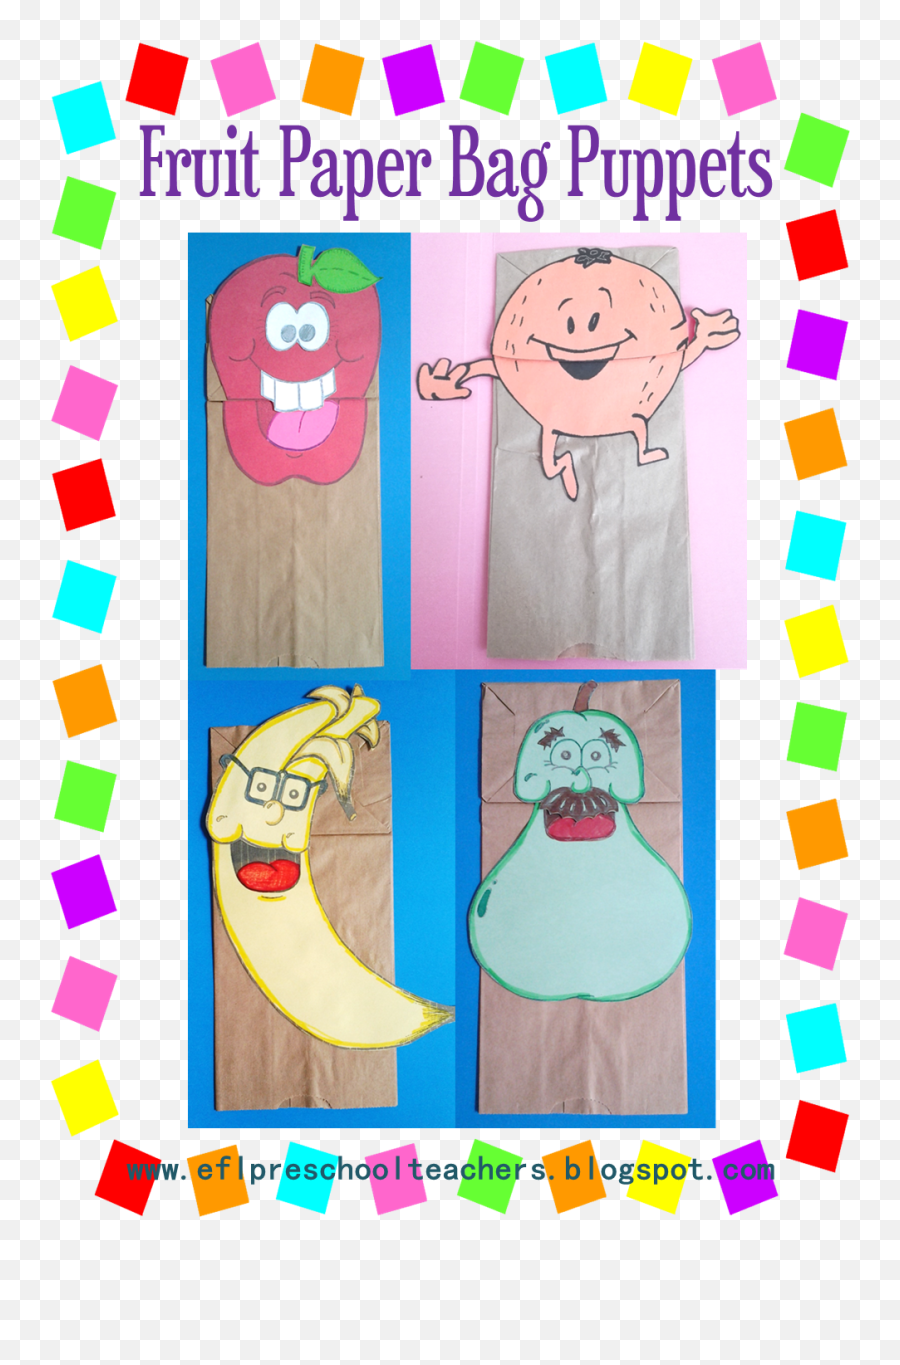 Eslefl Preschool Teachers January 2016 - Paper Fruit Finger Puppets Emoji,Fruit Emotions Book